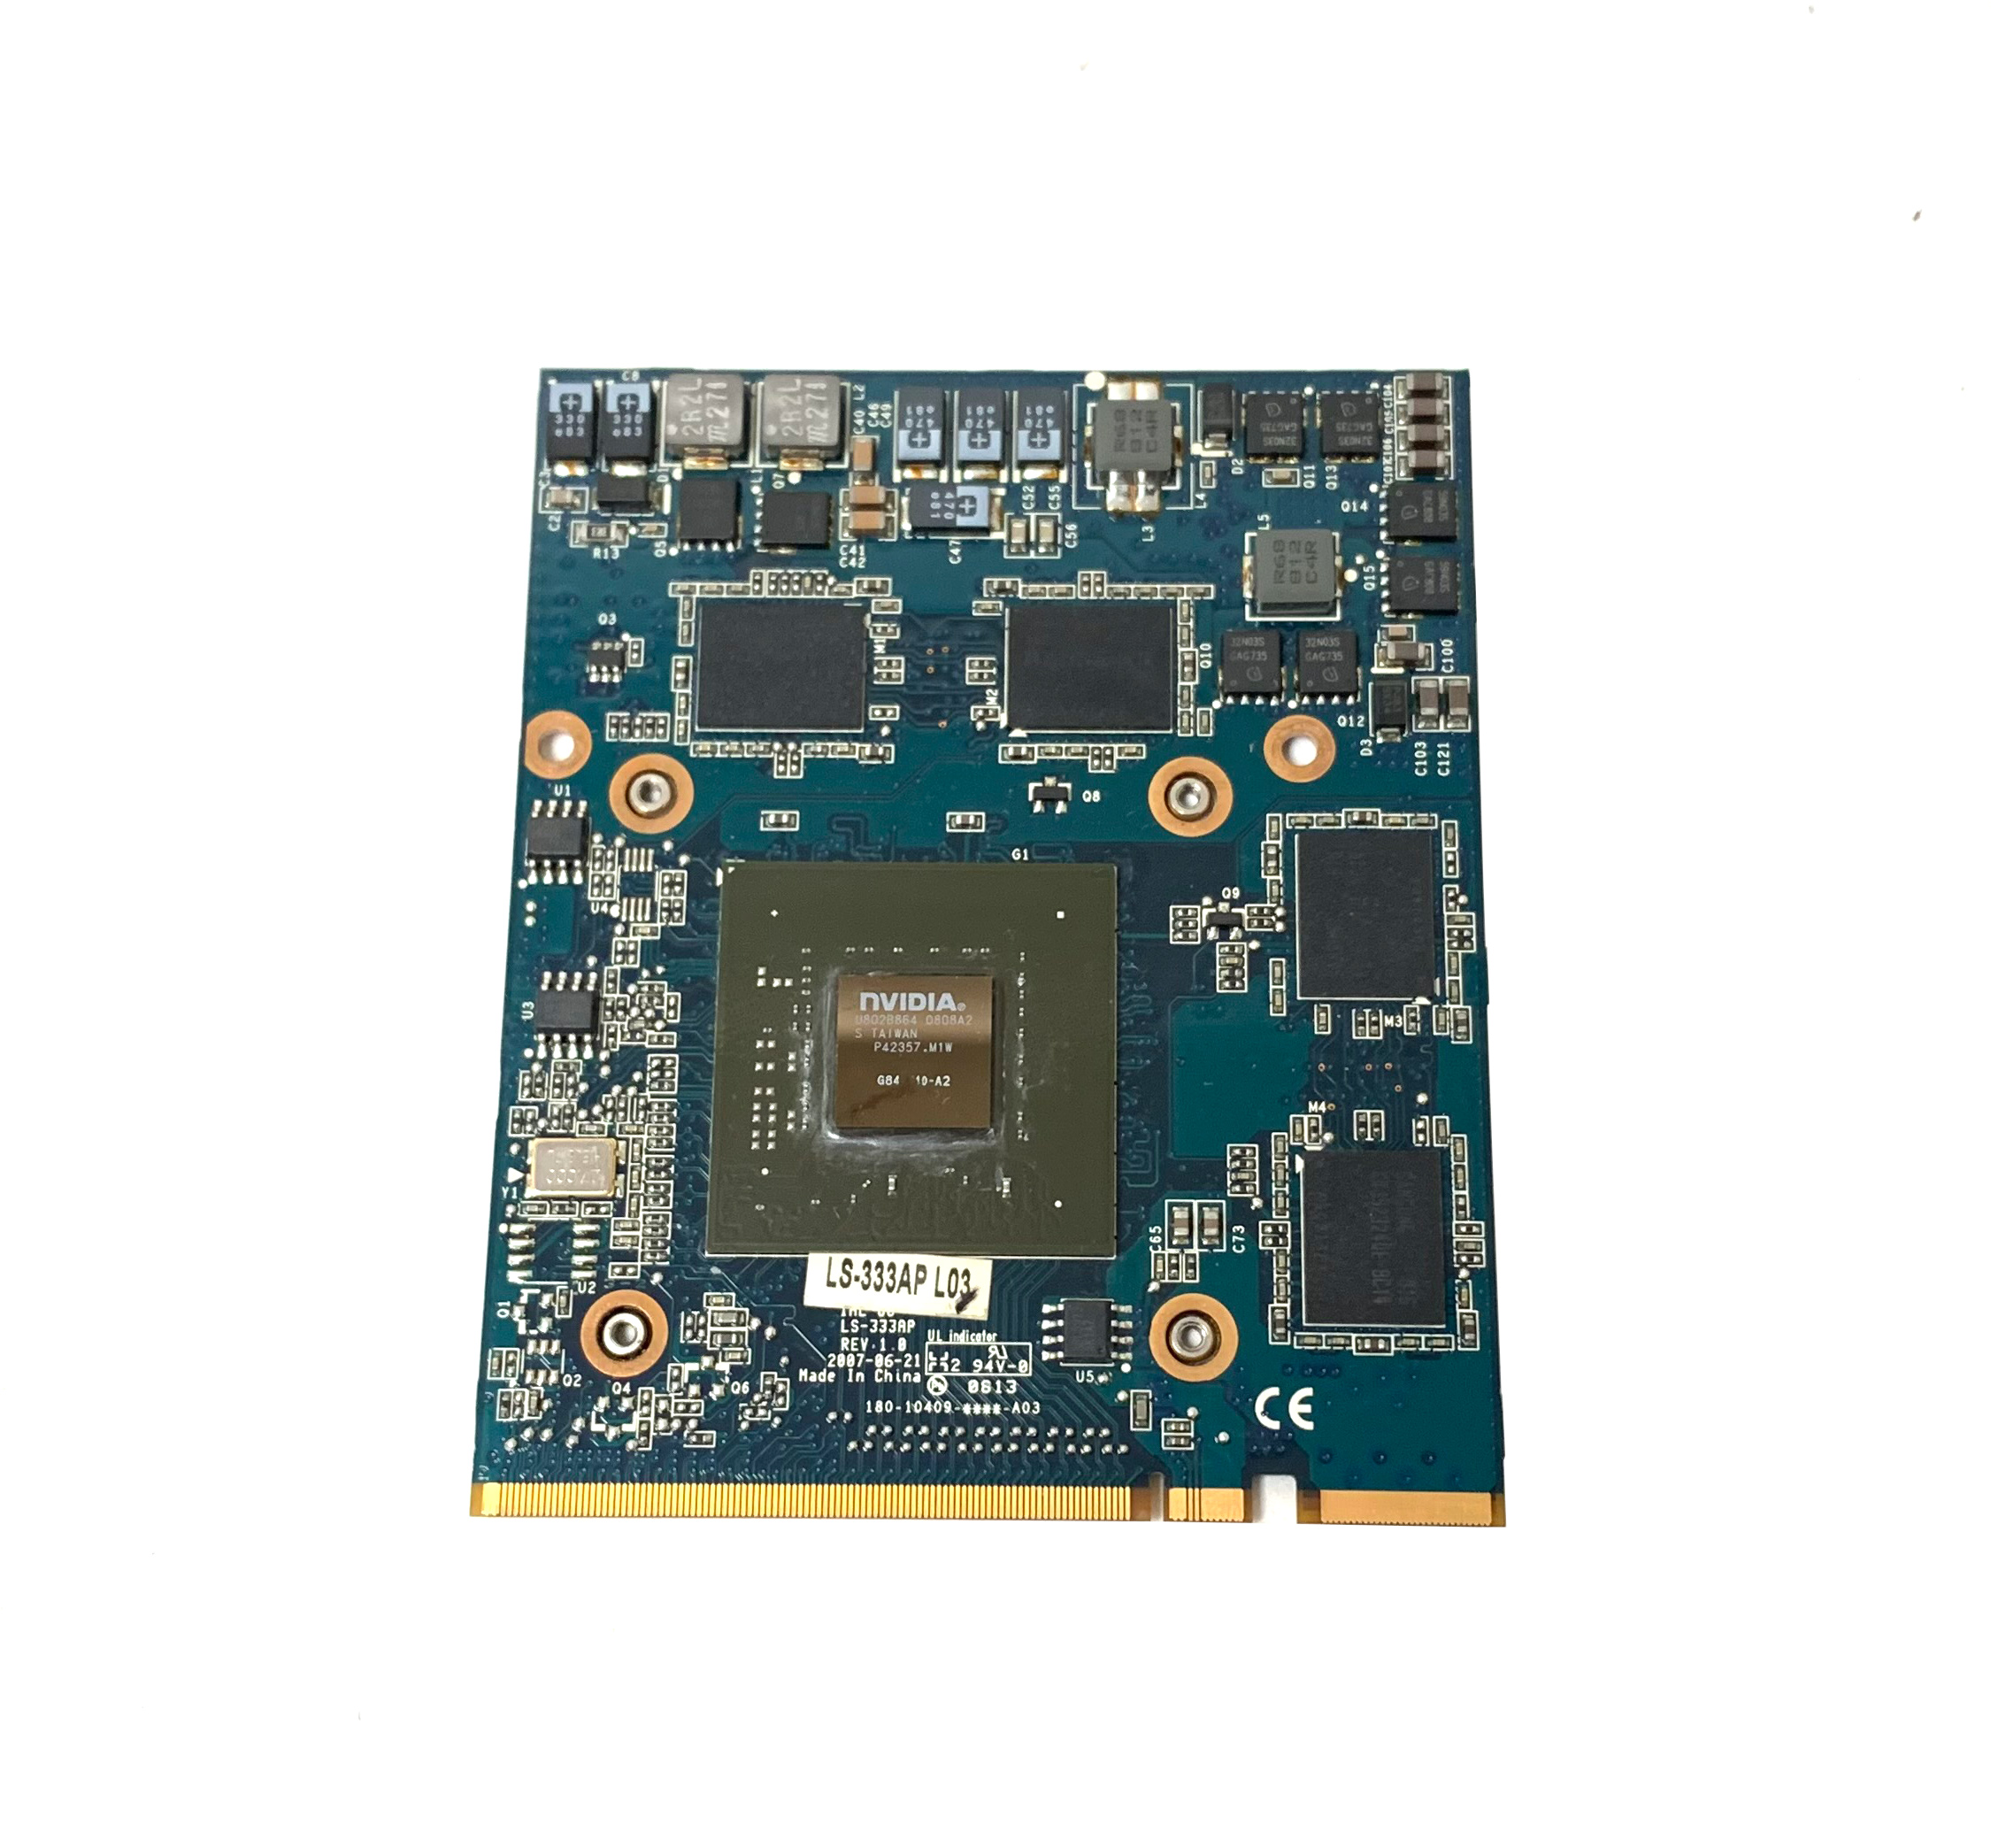 NVIDIA Quadro NVS320M 256MB G84-710-A2 VideoCard For 8710P 8710W 71C32532001